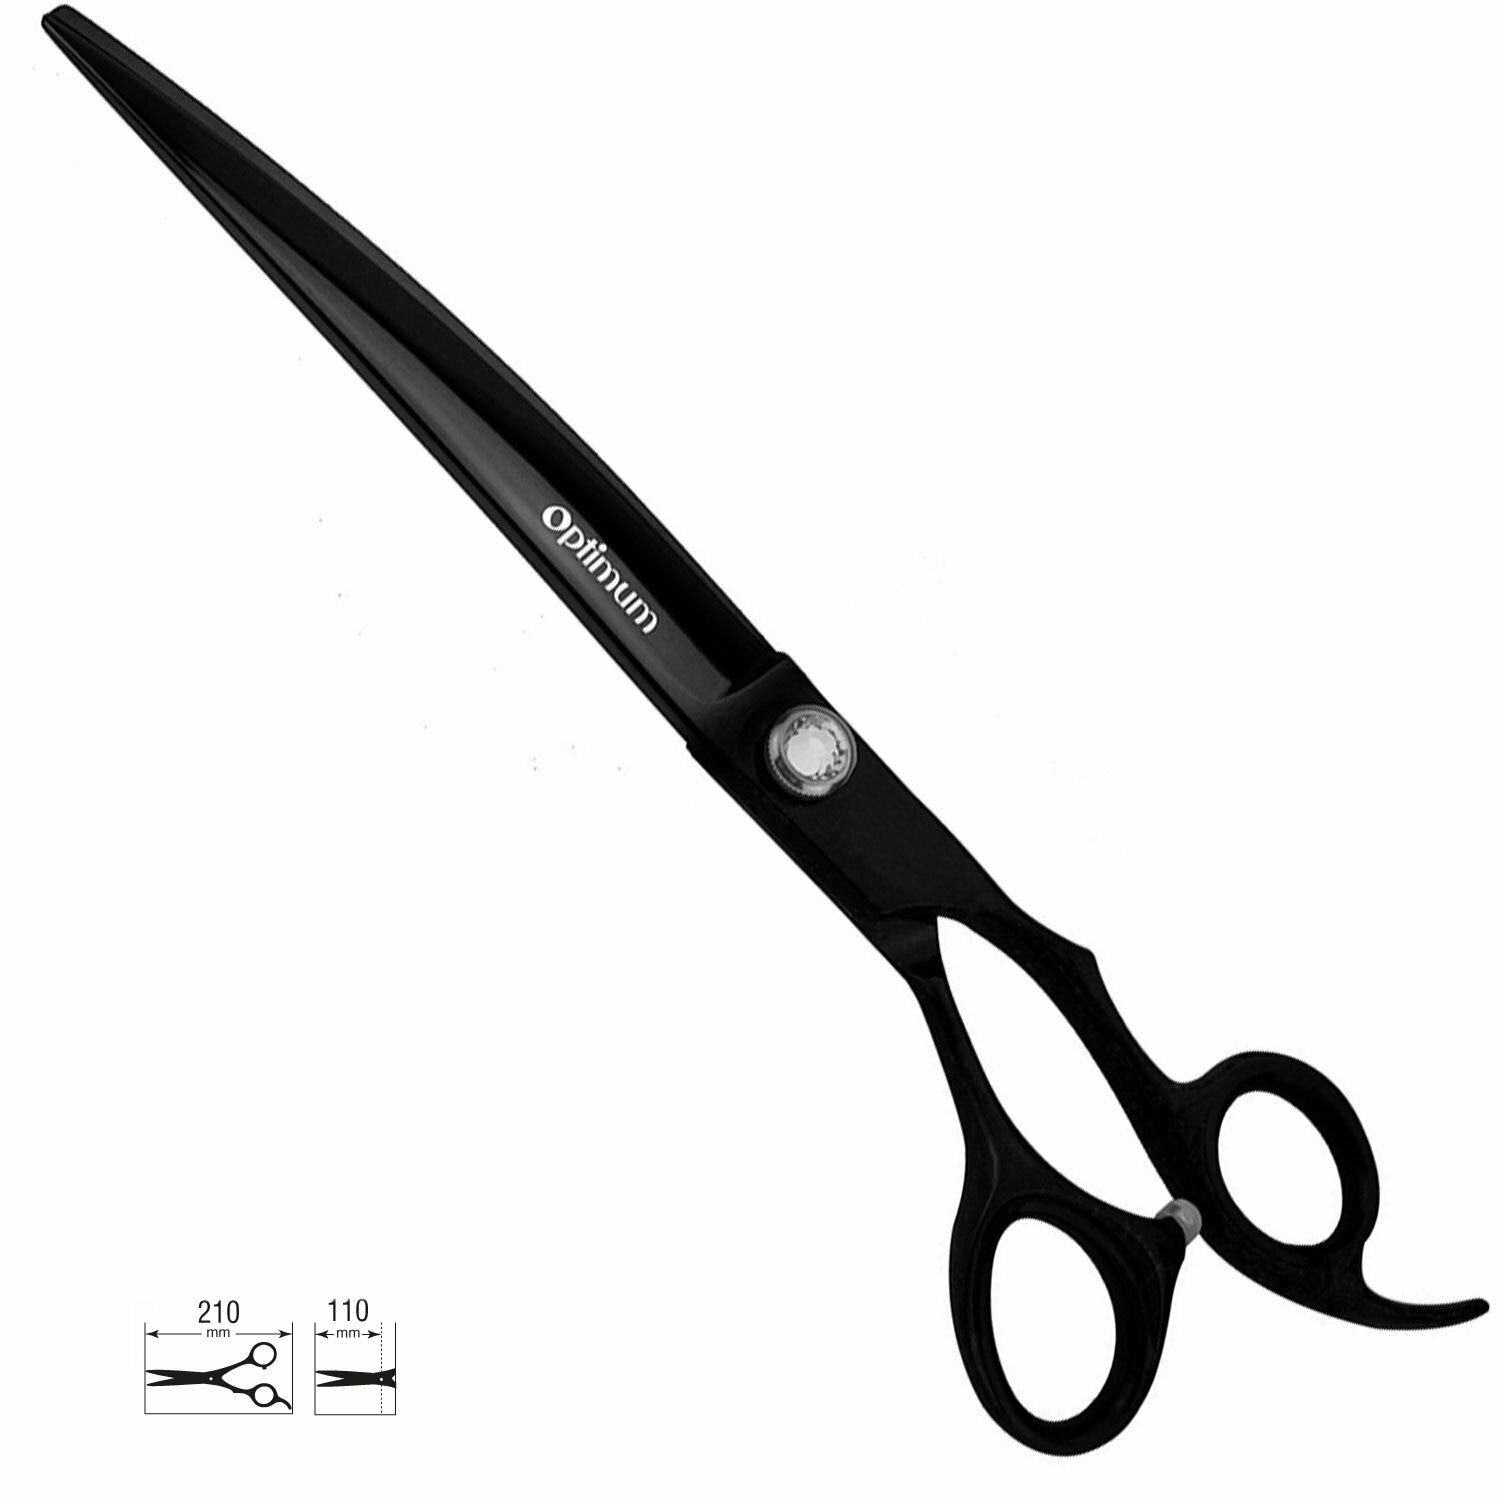 Japanese steel hair scissors 21 cm curved